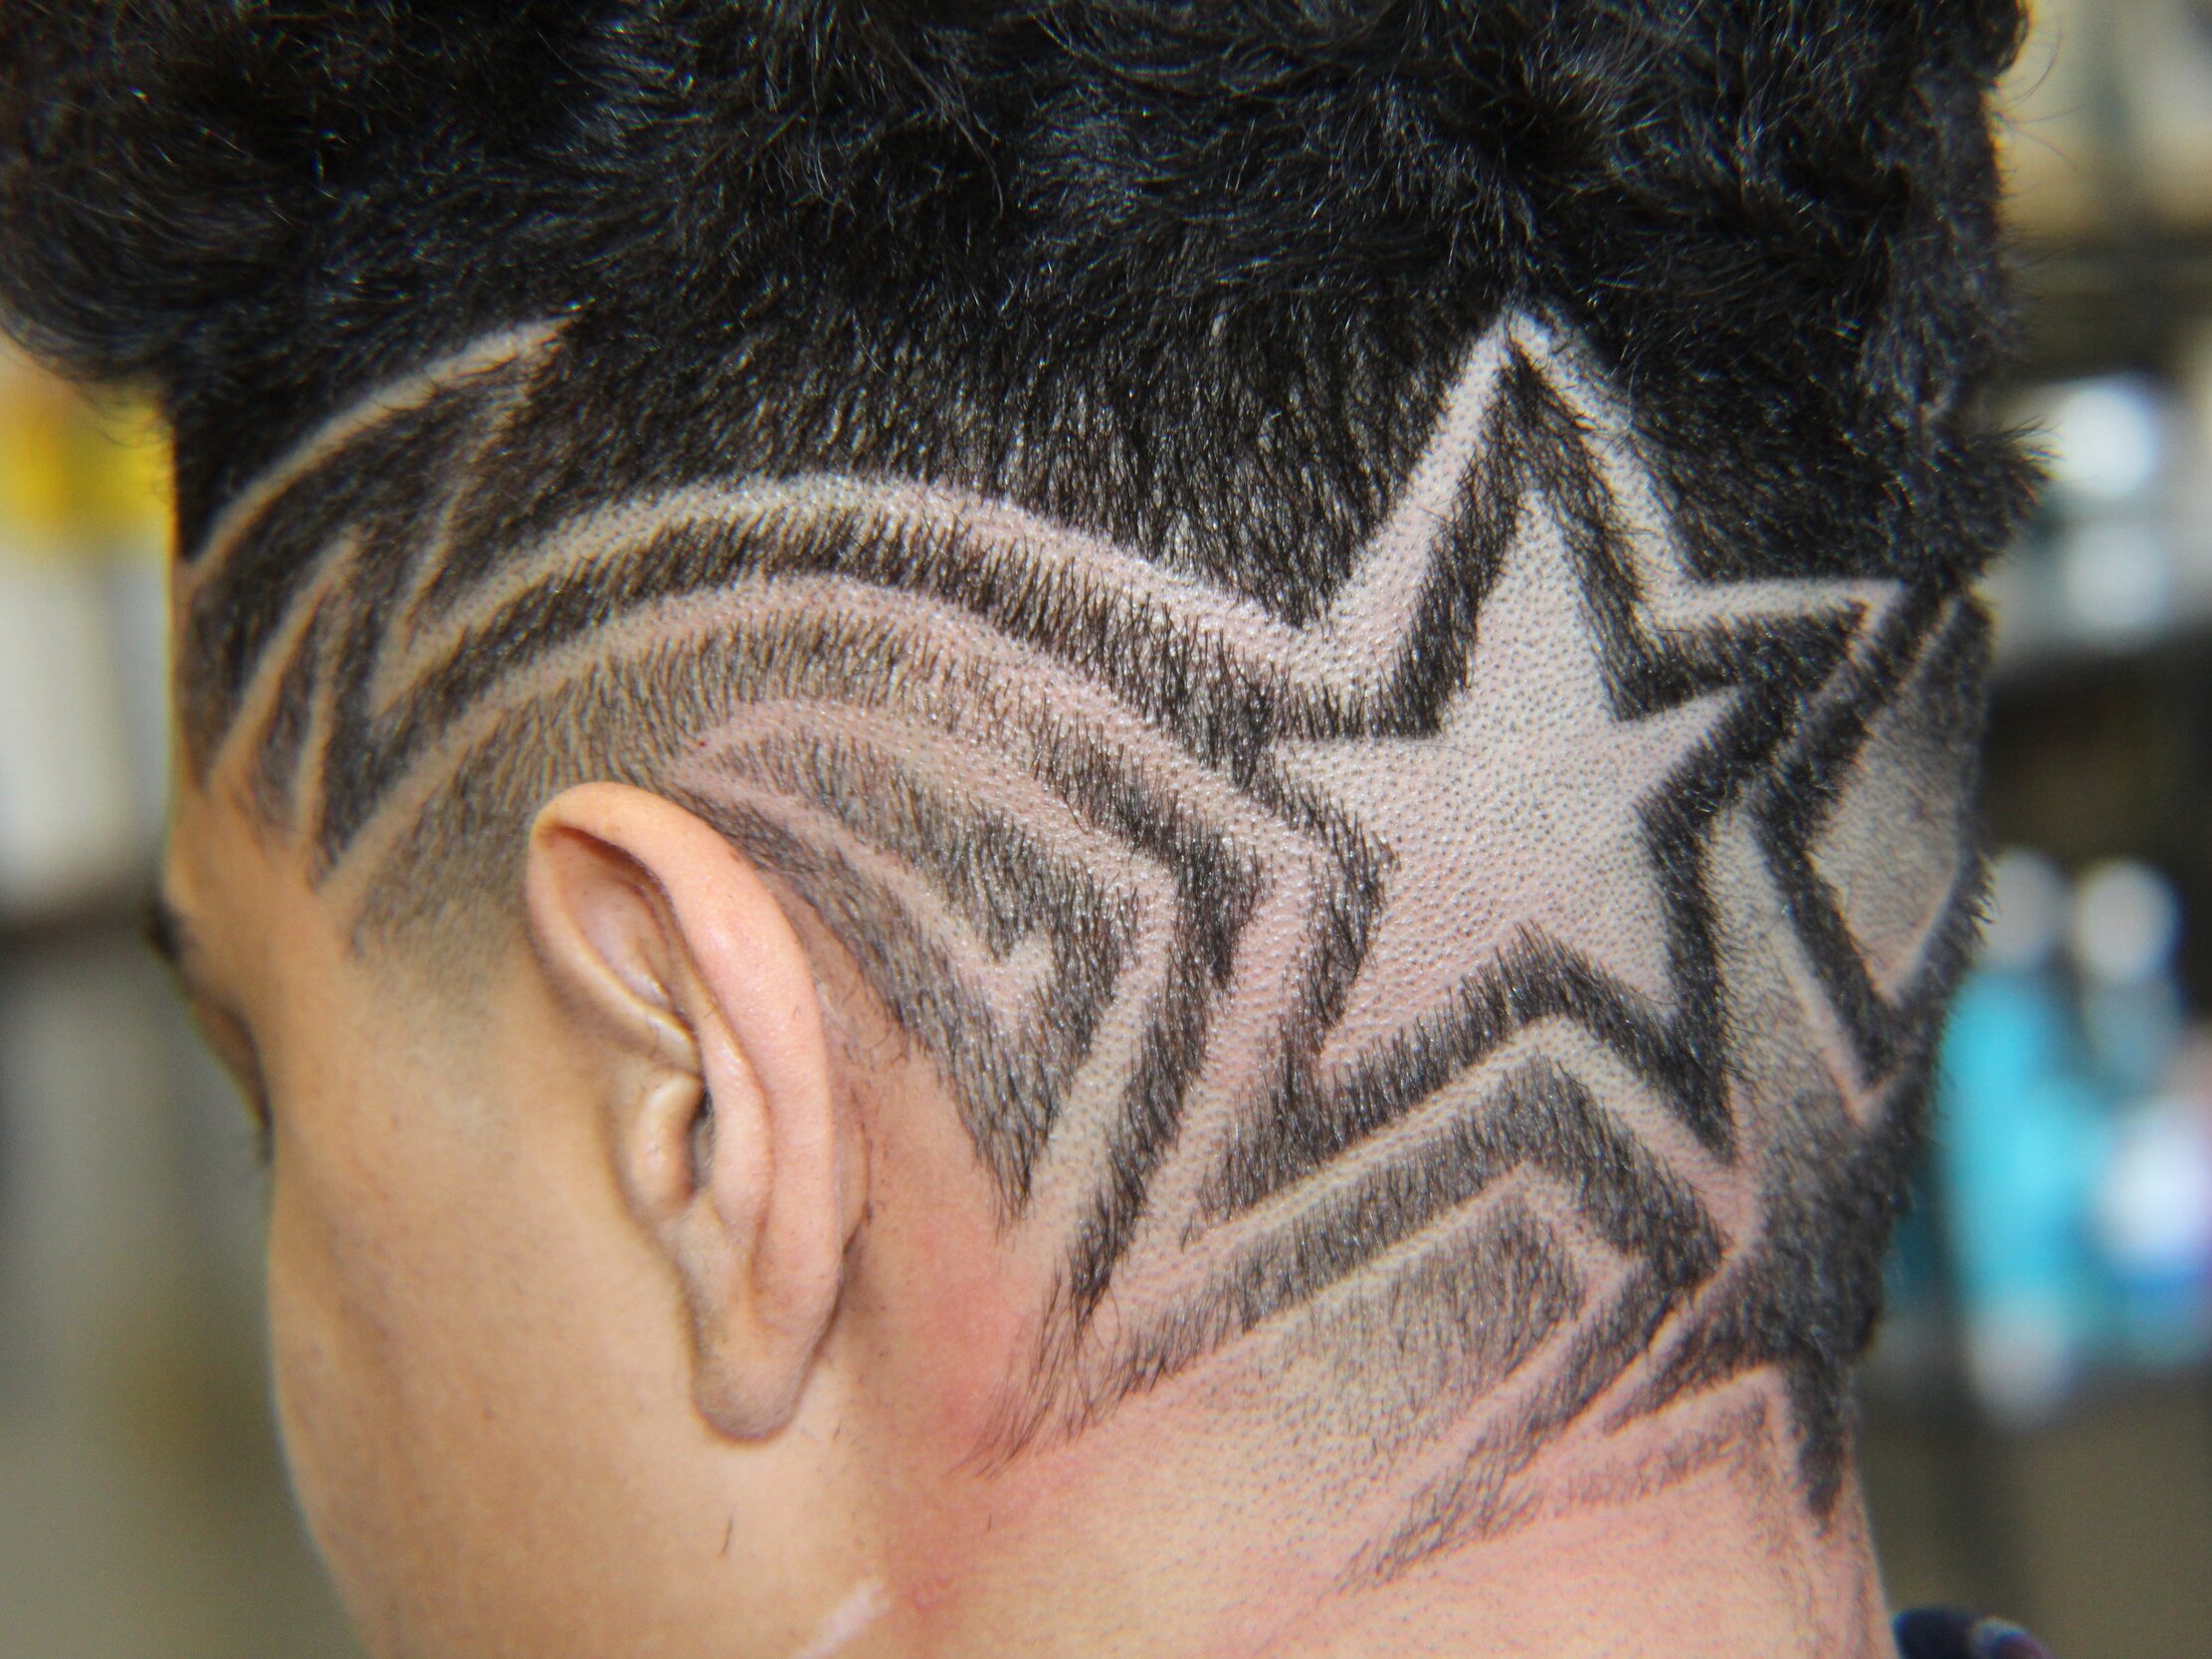 Creative haircut with star design